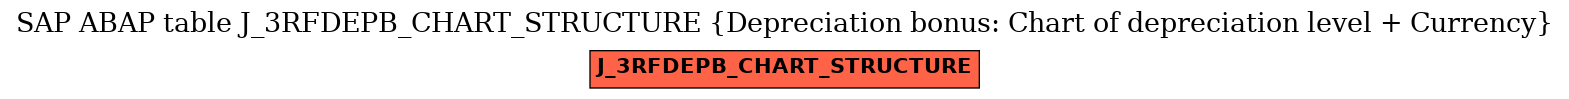 E-R Diagram for table J_3RFDEPB_CHART_STRUCTURE (Depreciation bonus: Chart of depreciation level + Currency)